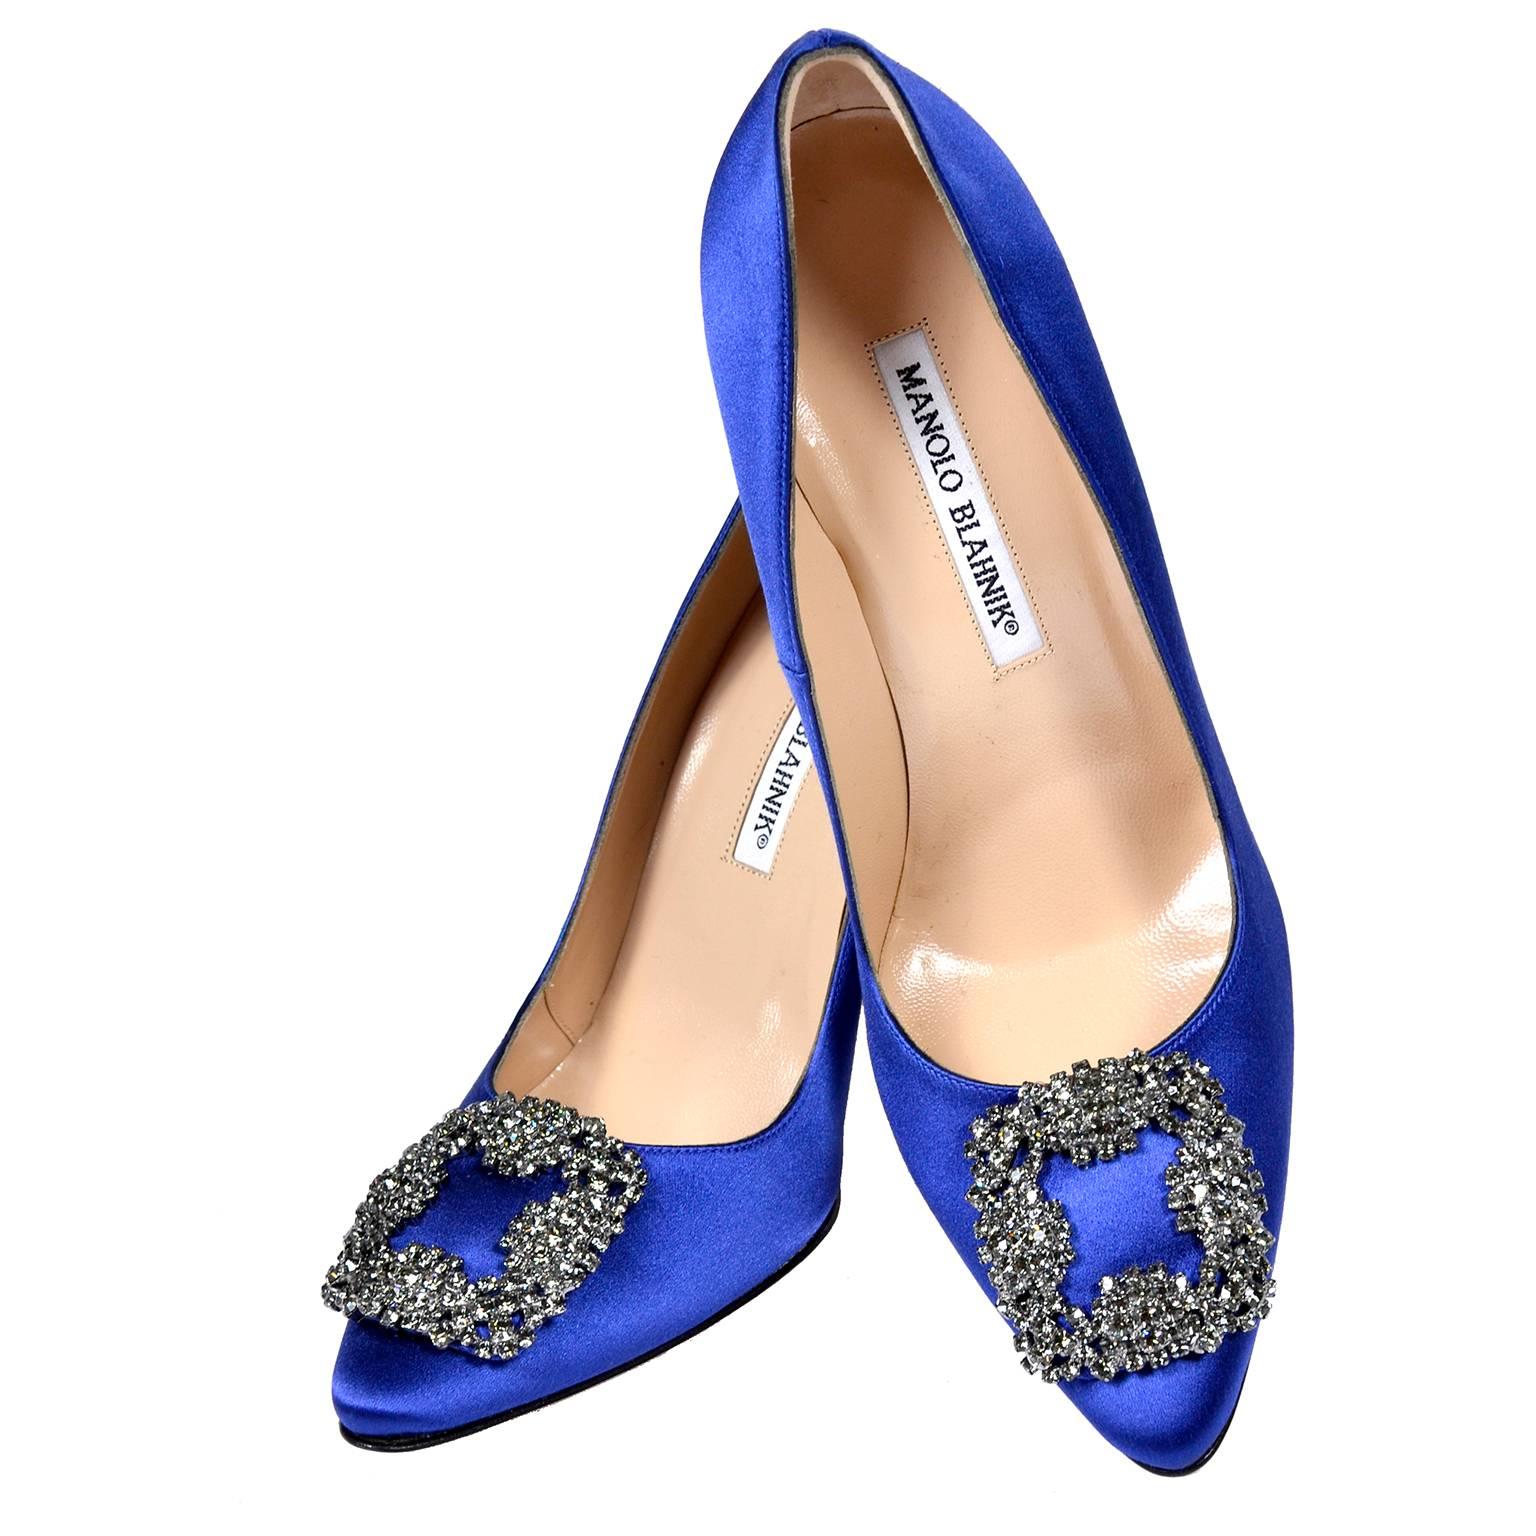 New Manolo Blahnik Carrie Bradshaw Blue Satin Shoes Lanza Heels in box 37.5